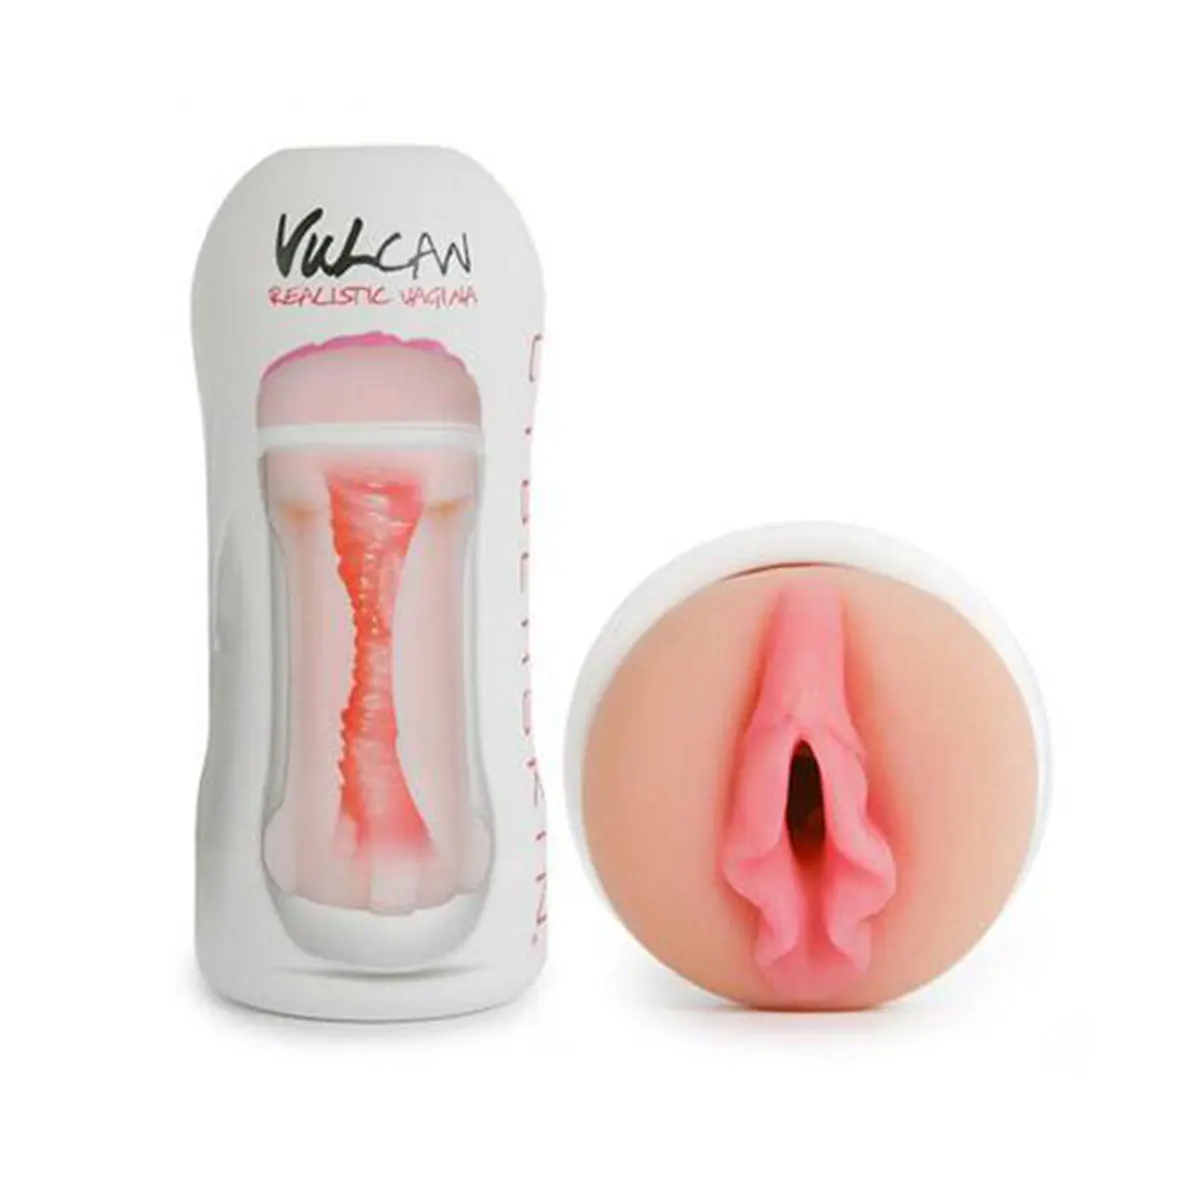 Veštačka vagina reljefaste unutrašnjosti 15cm